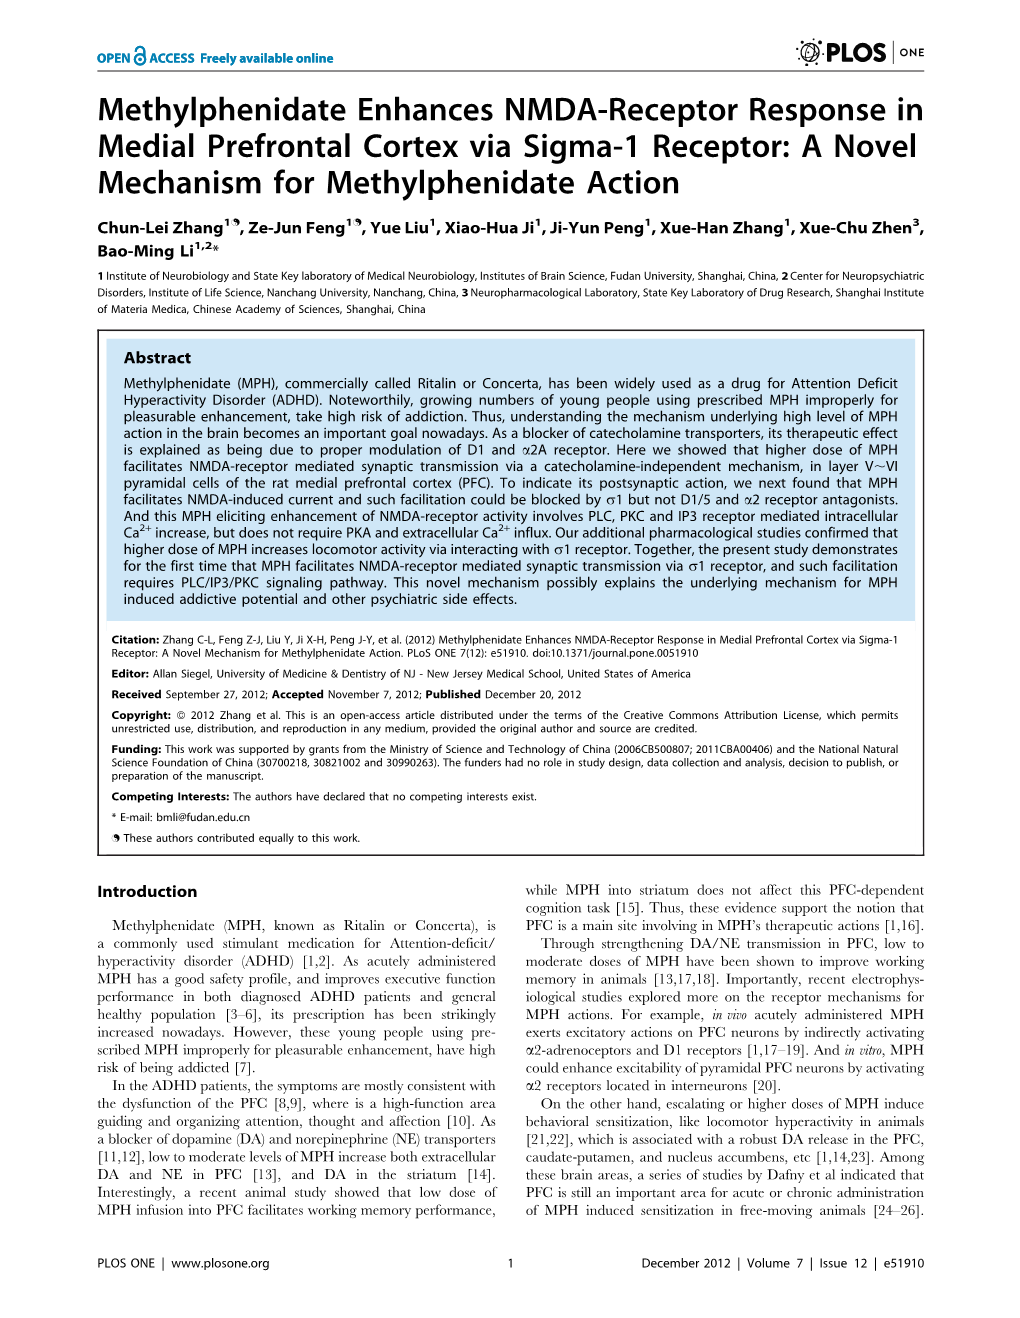 Methylphenidate Enhances NMDA-Receptor Response in Medial Prefrontal Cortex Via Sigma-1 Receptor: a Novel Mechanism for Methylphenidate Action